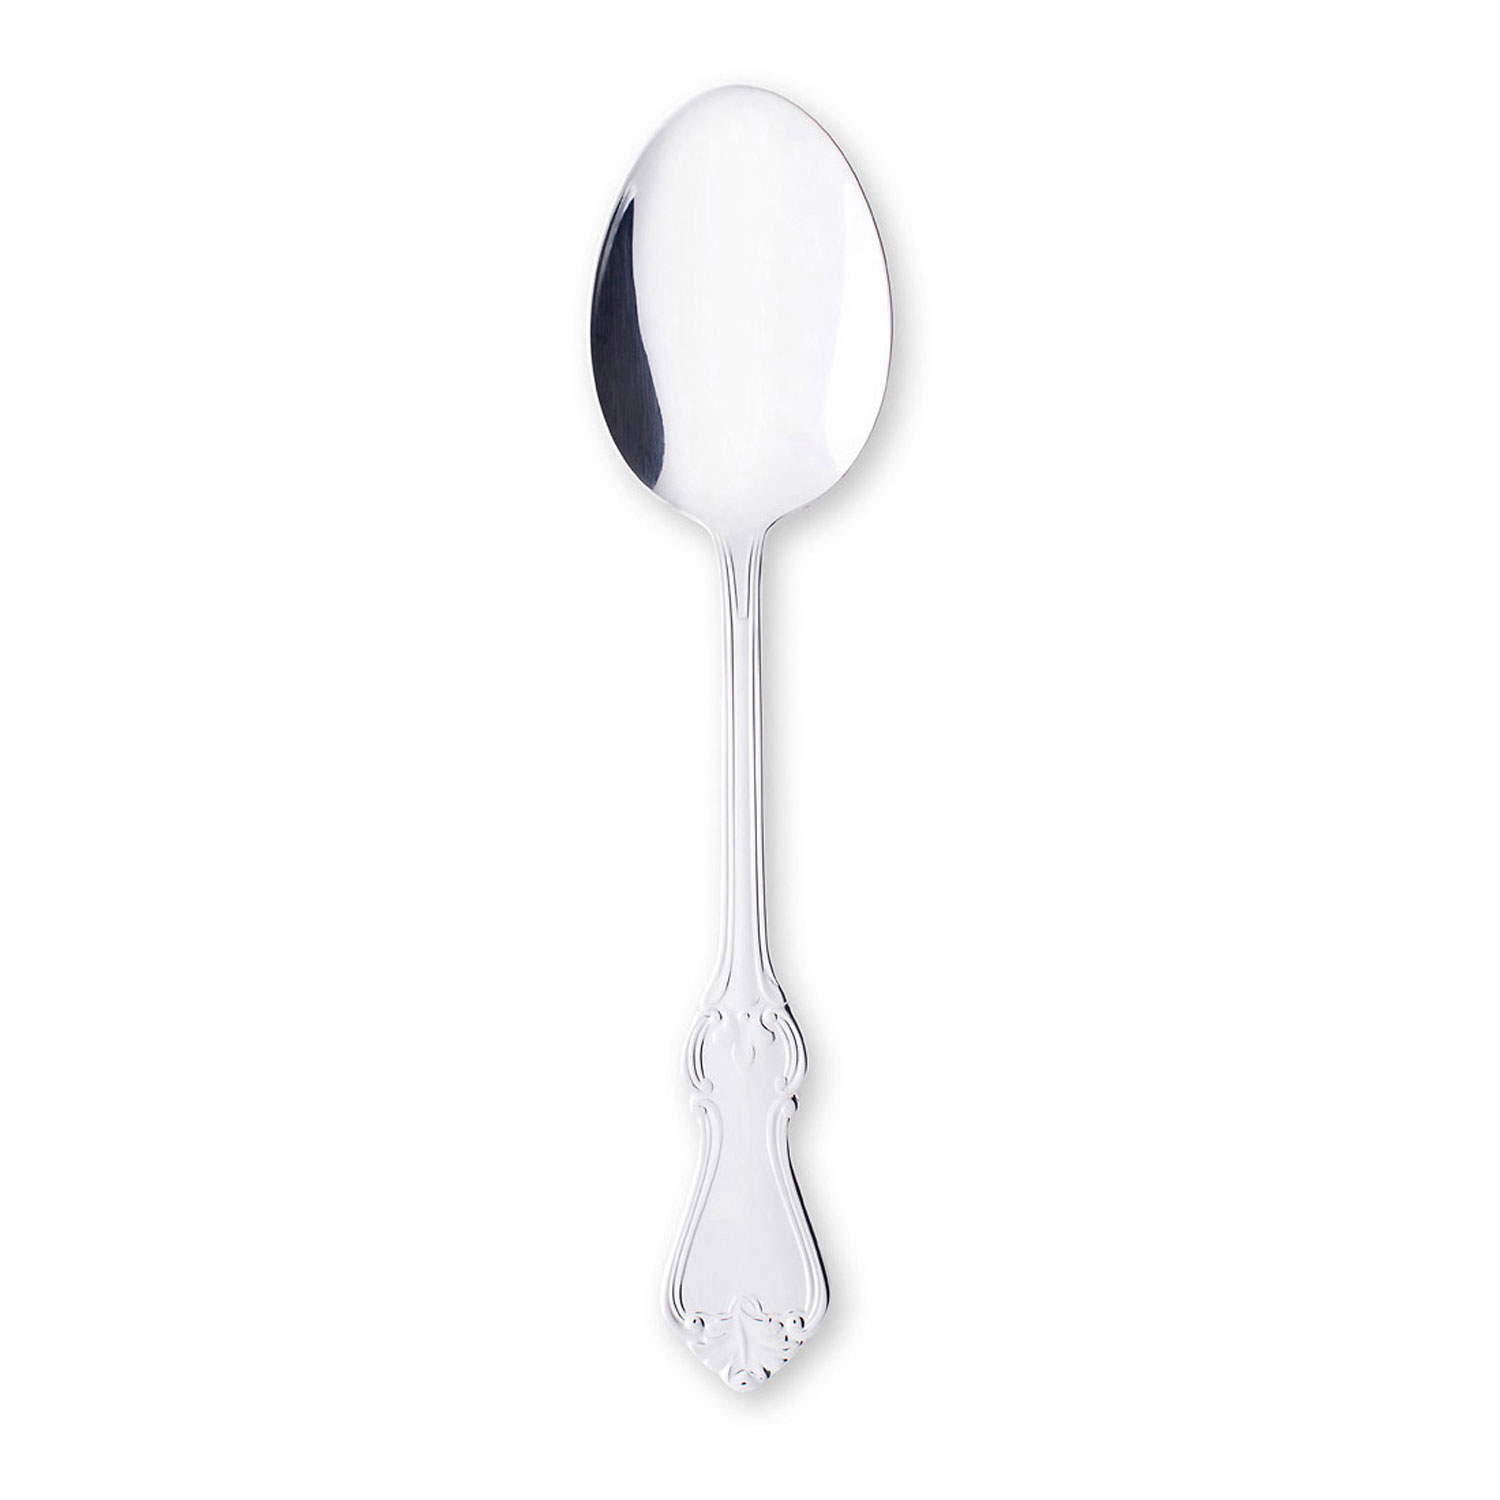 Serving Spoon Silicone / Acacia Wood 31 cm - Staub @ RoyalDesign